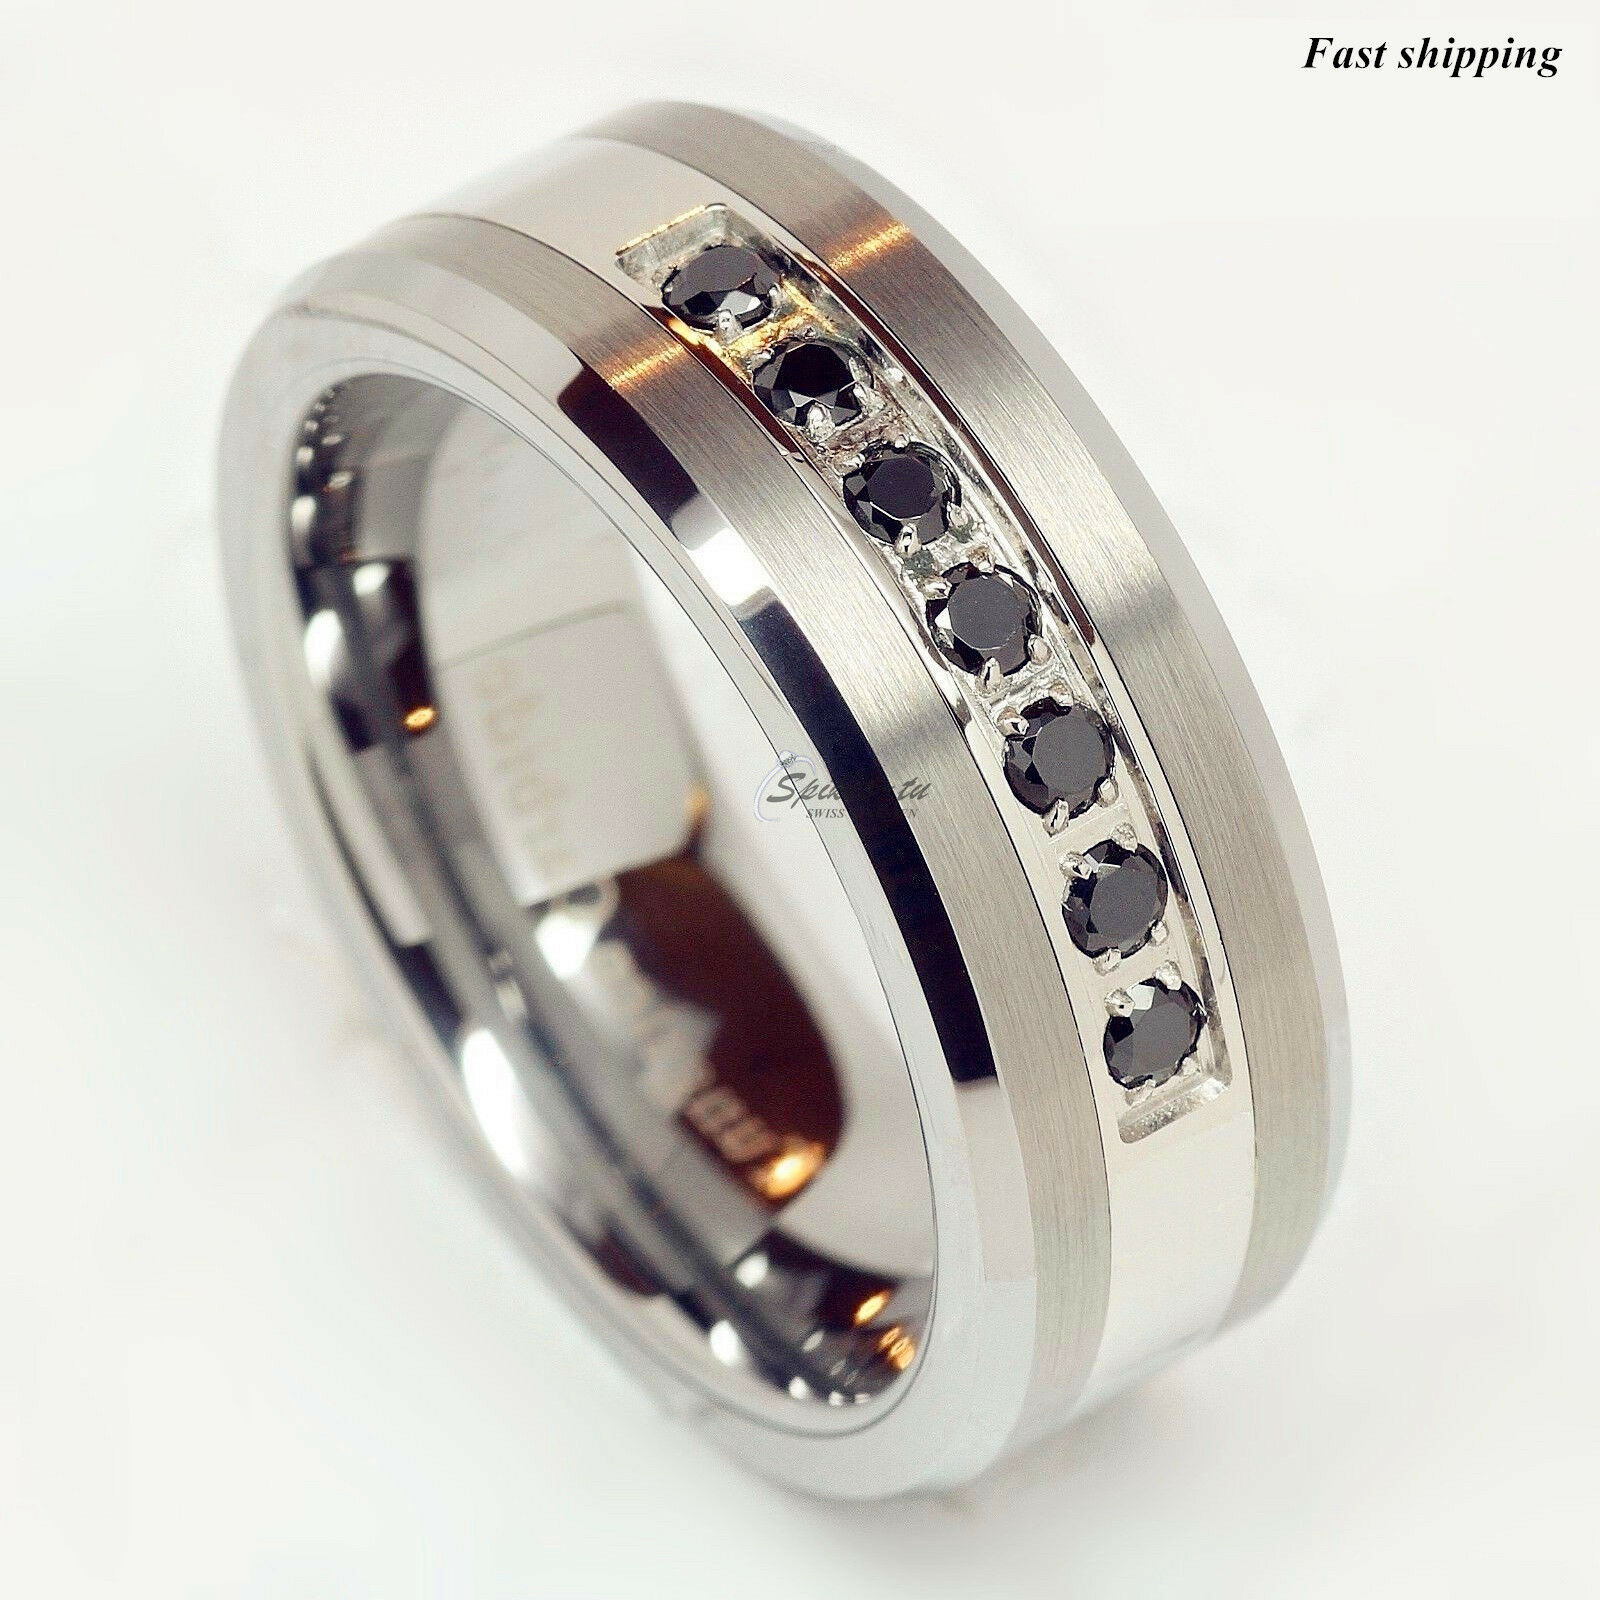 Luxury Atop Tungsten Ring Black Diamonds Mens Wedding Band Brushed Size 6-13